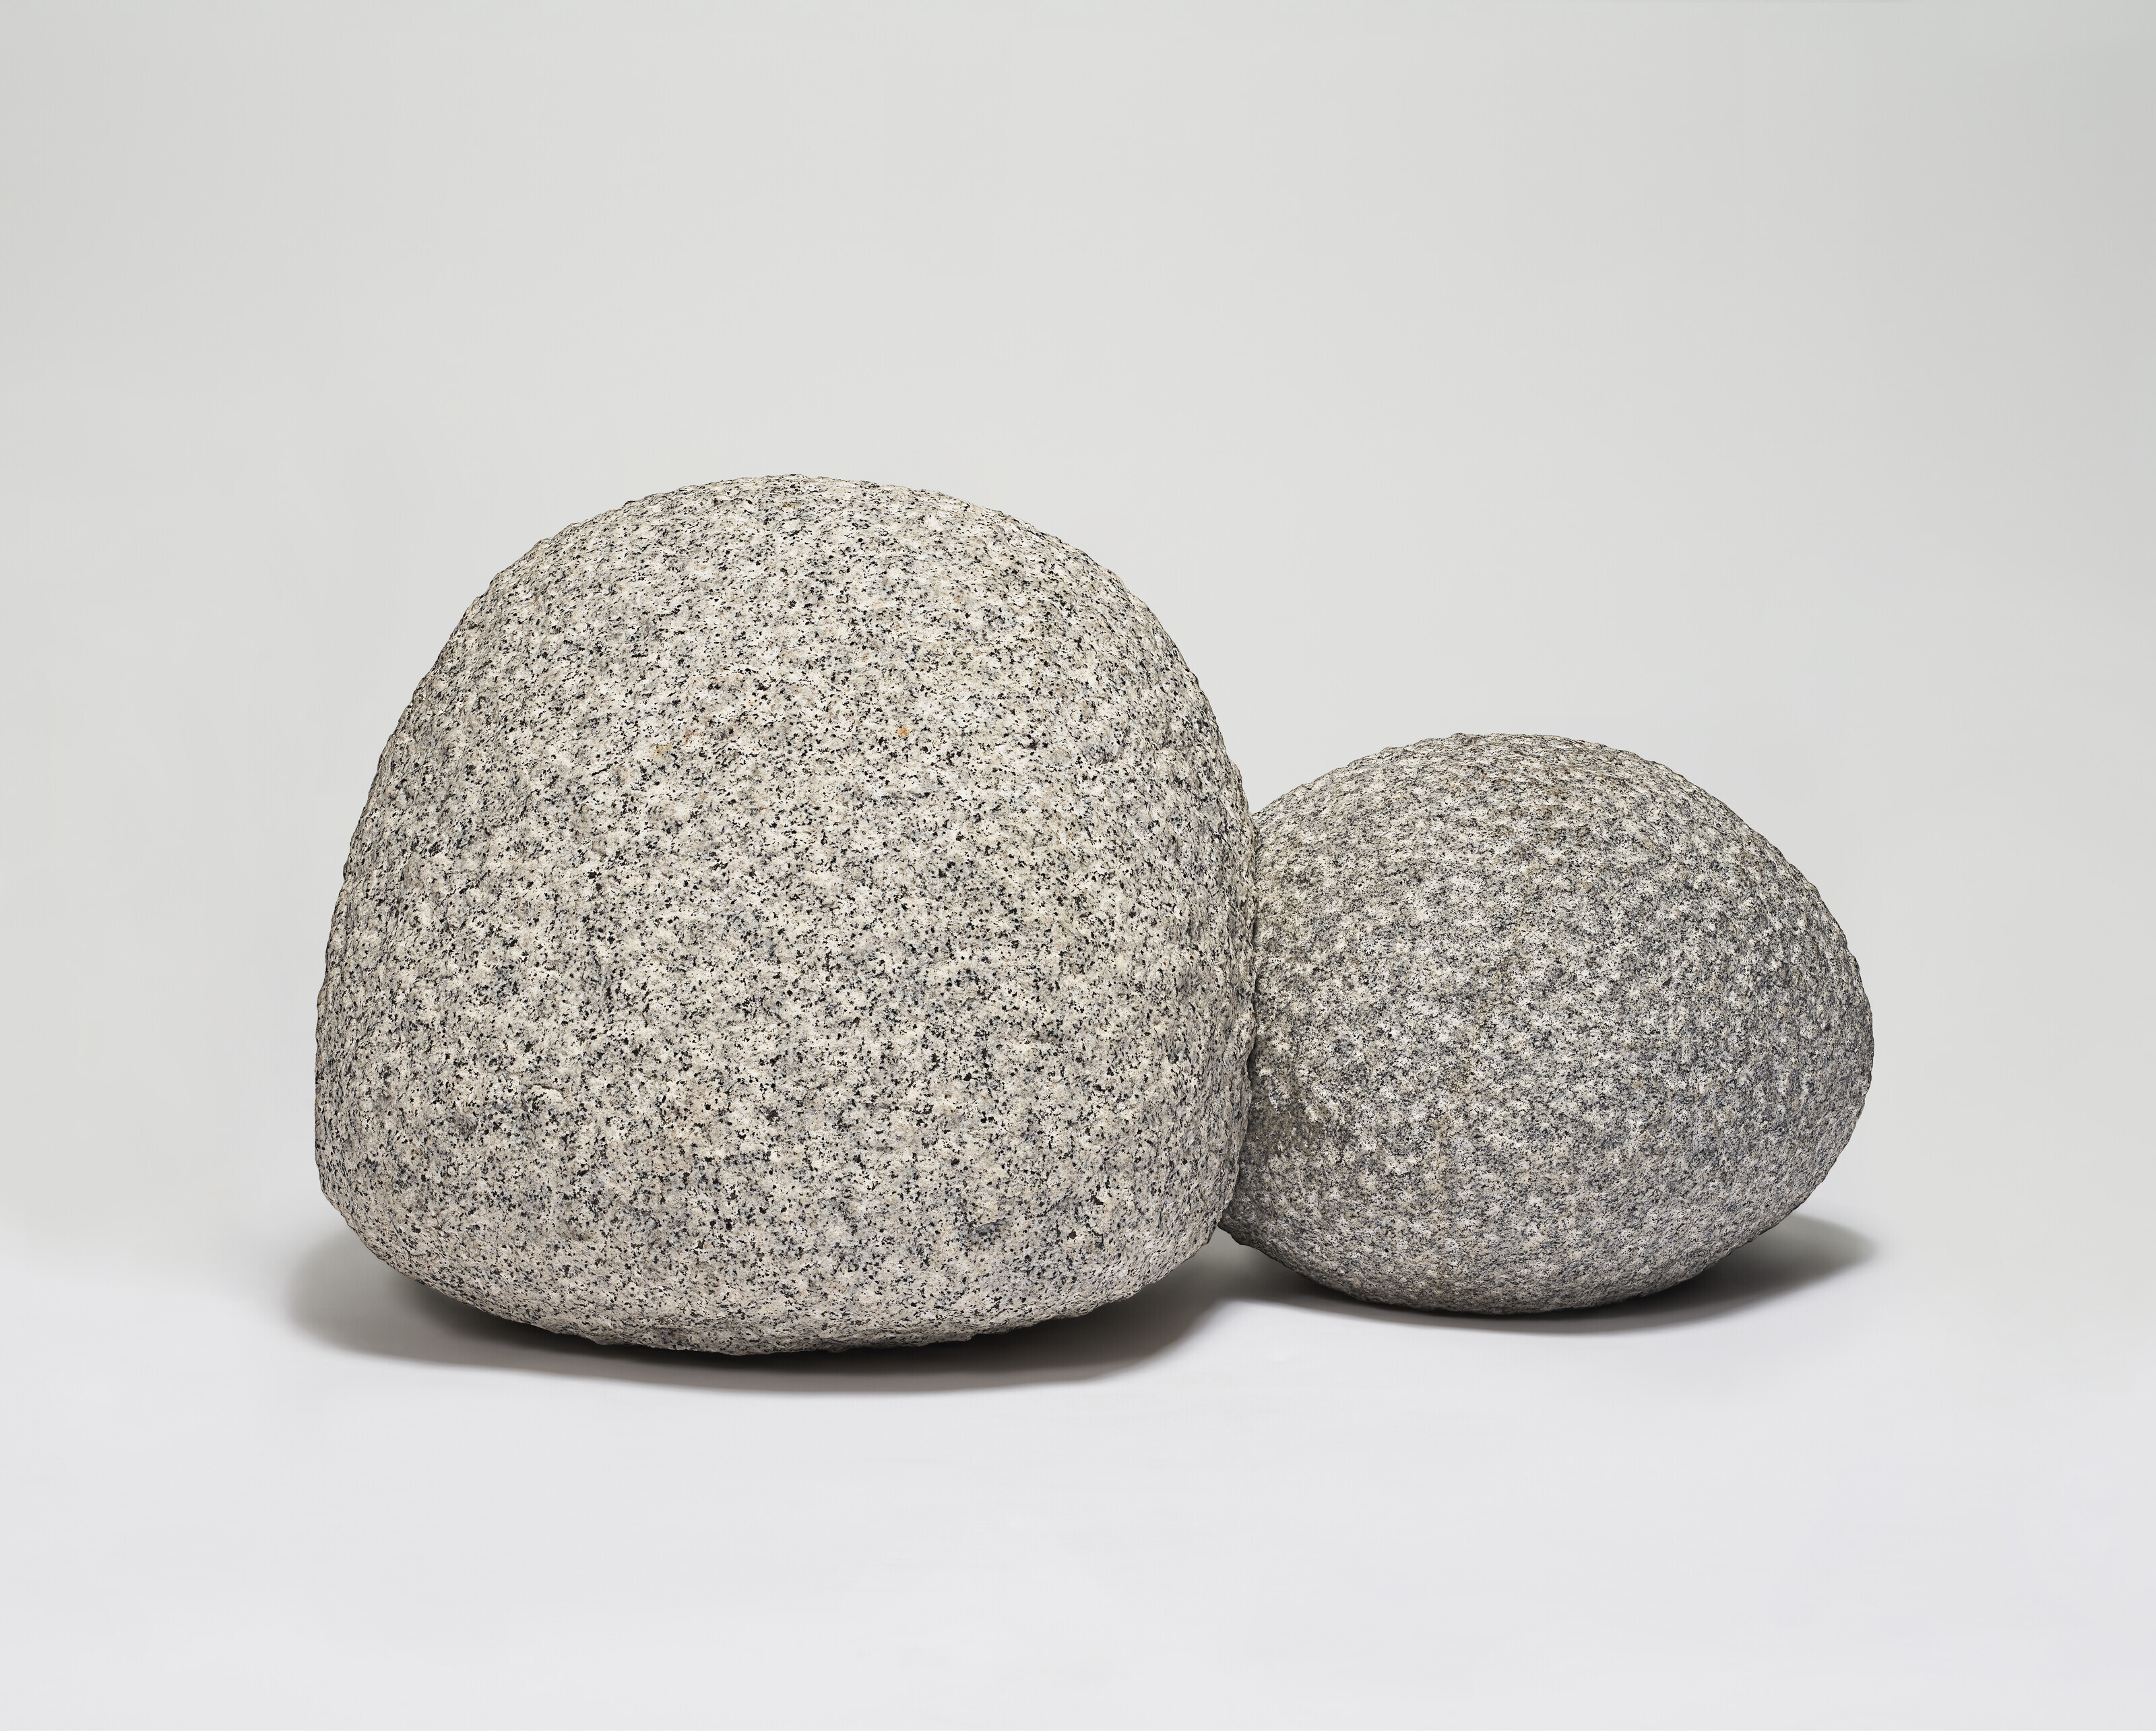 Artwork by Isamu Noguchi, Two Dependent Pieces, Made of Aji granite